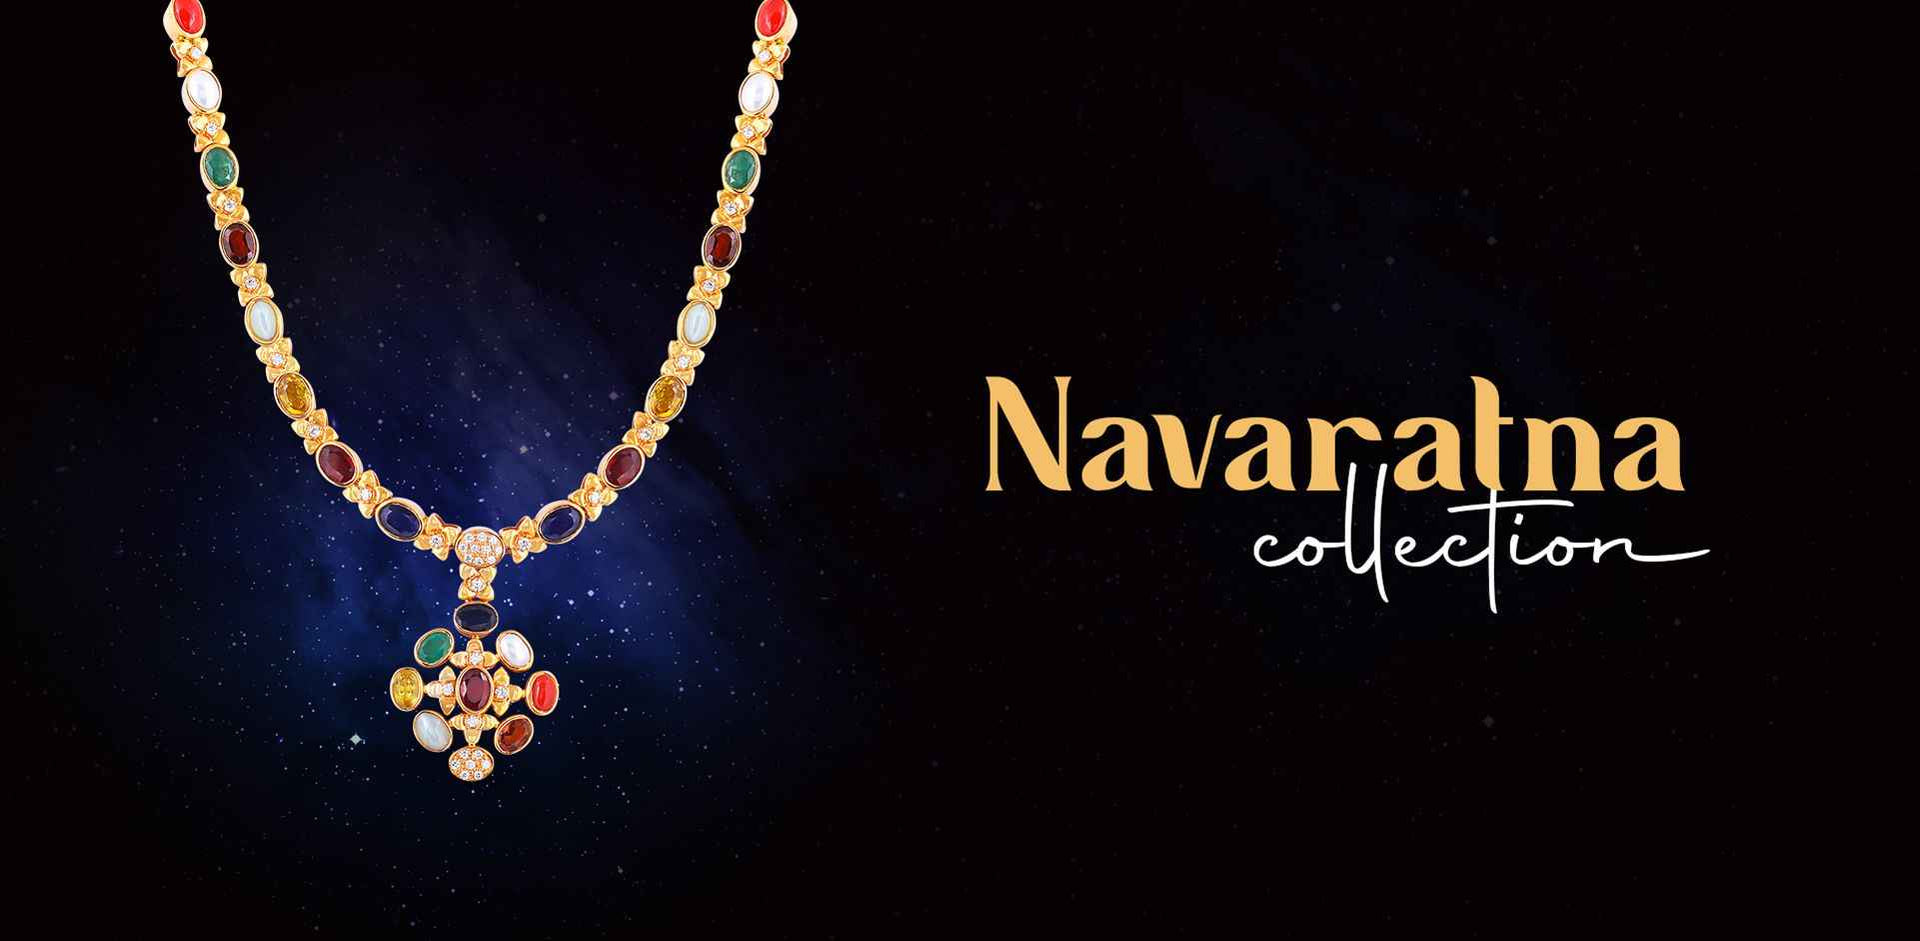 Navaratna Collection